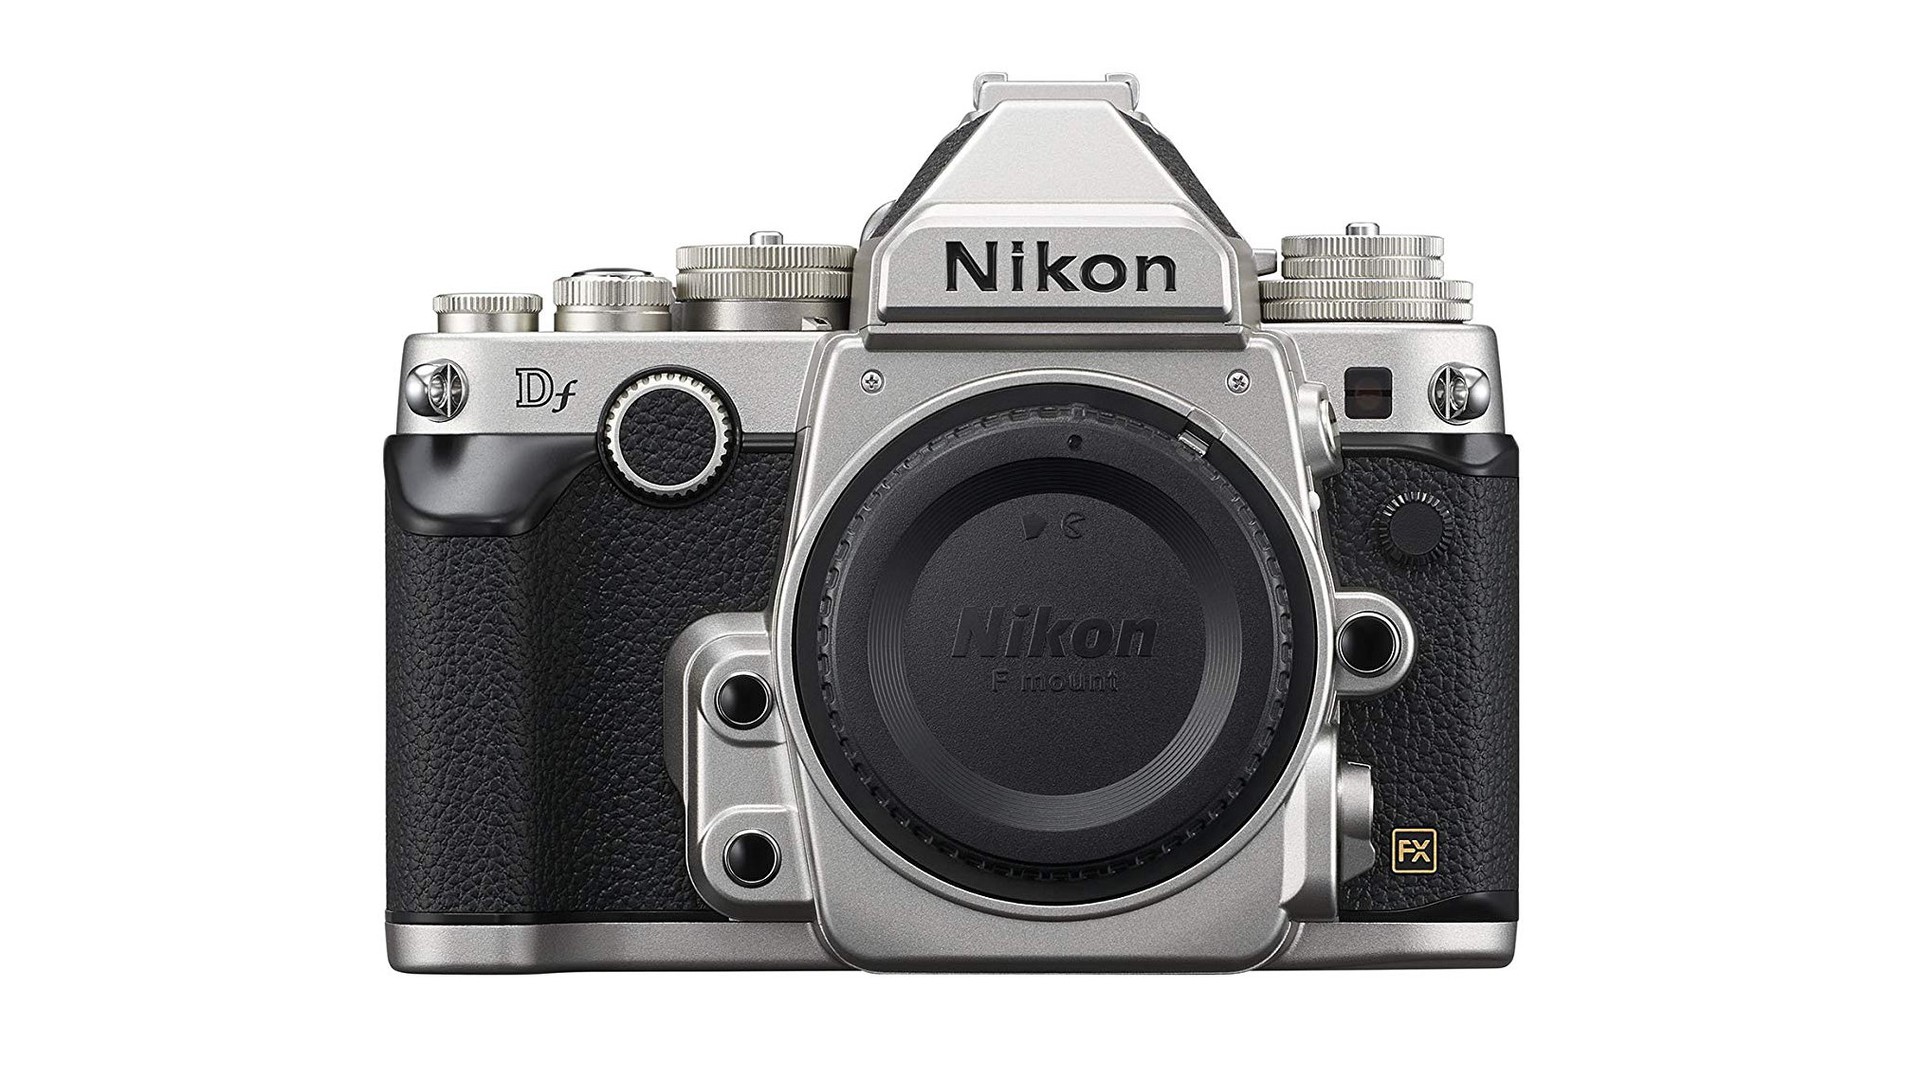 Nikon Df DSLR camera body